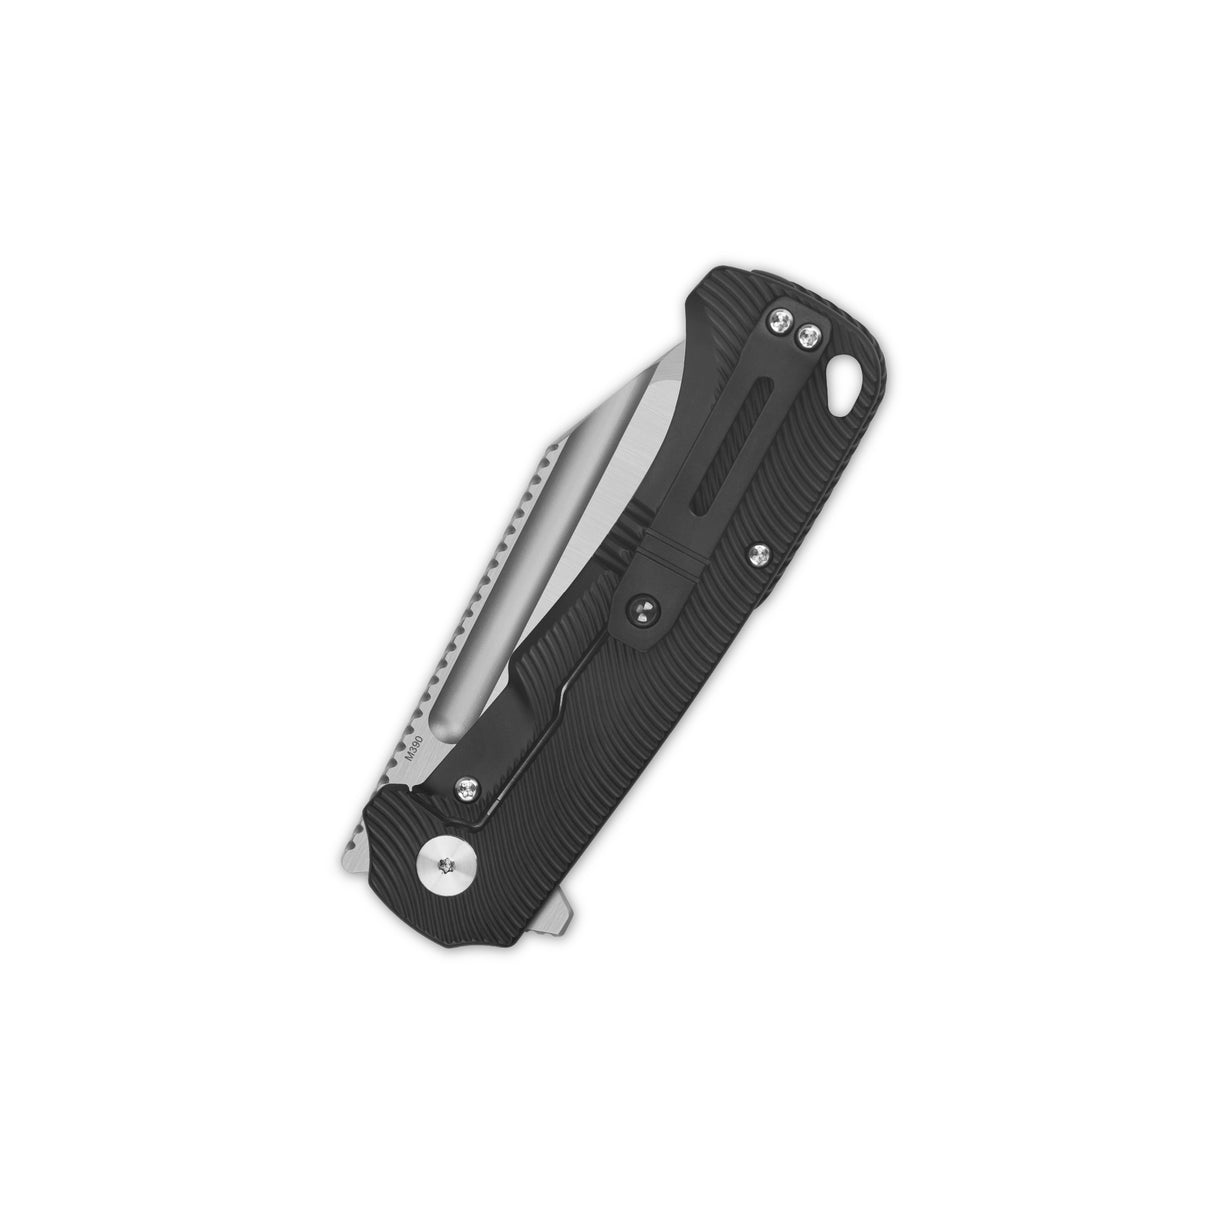 QSP Rhino Pocket knife Böhler M390 Compound blade Texture Titanium handle